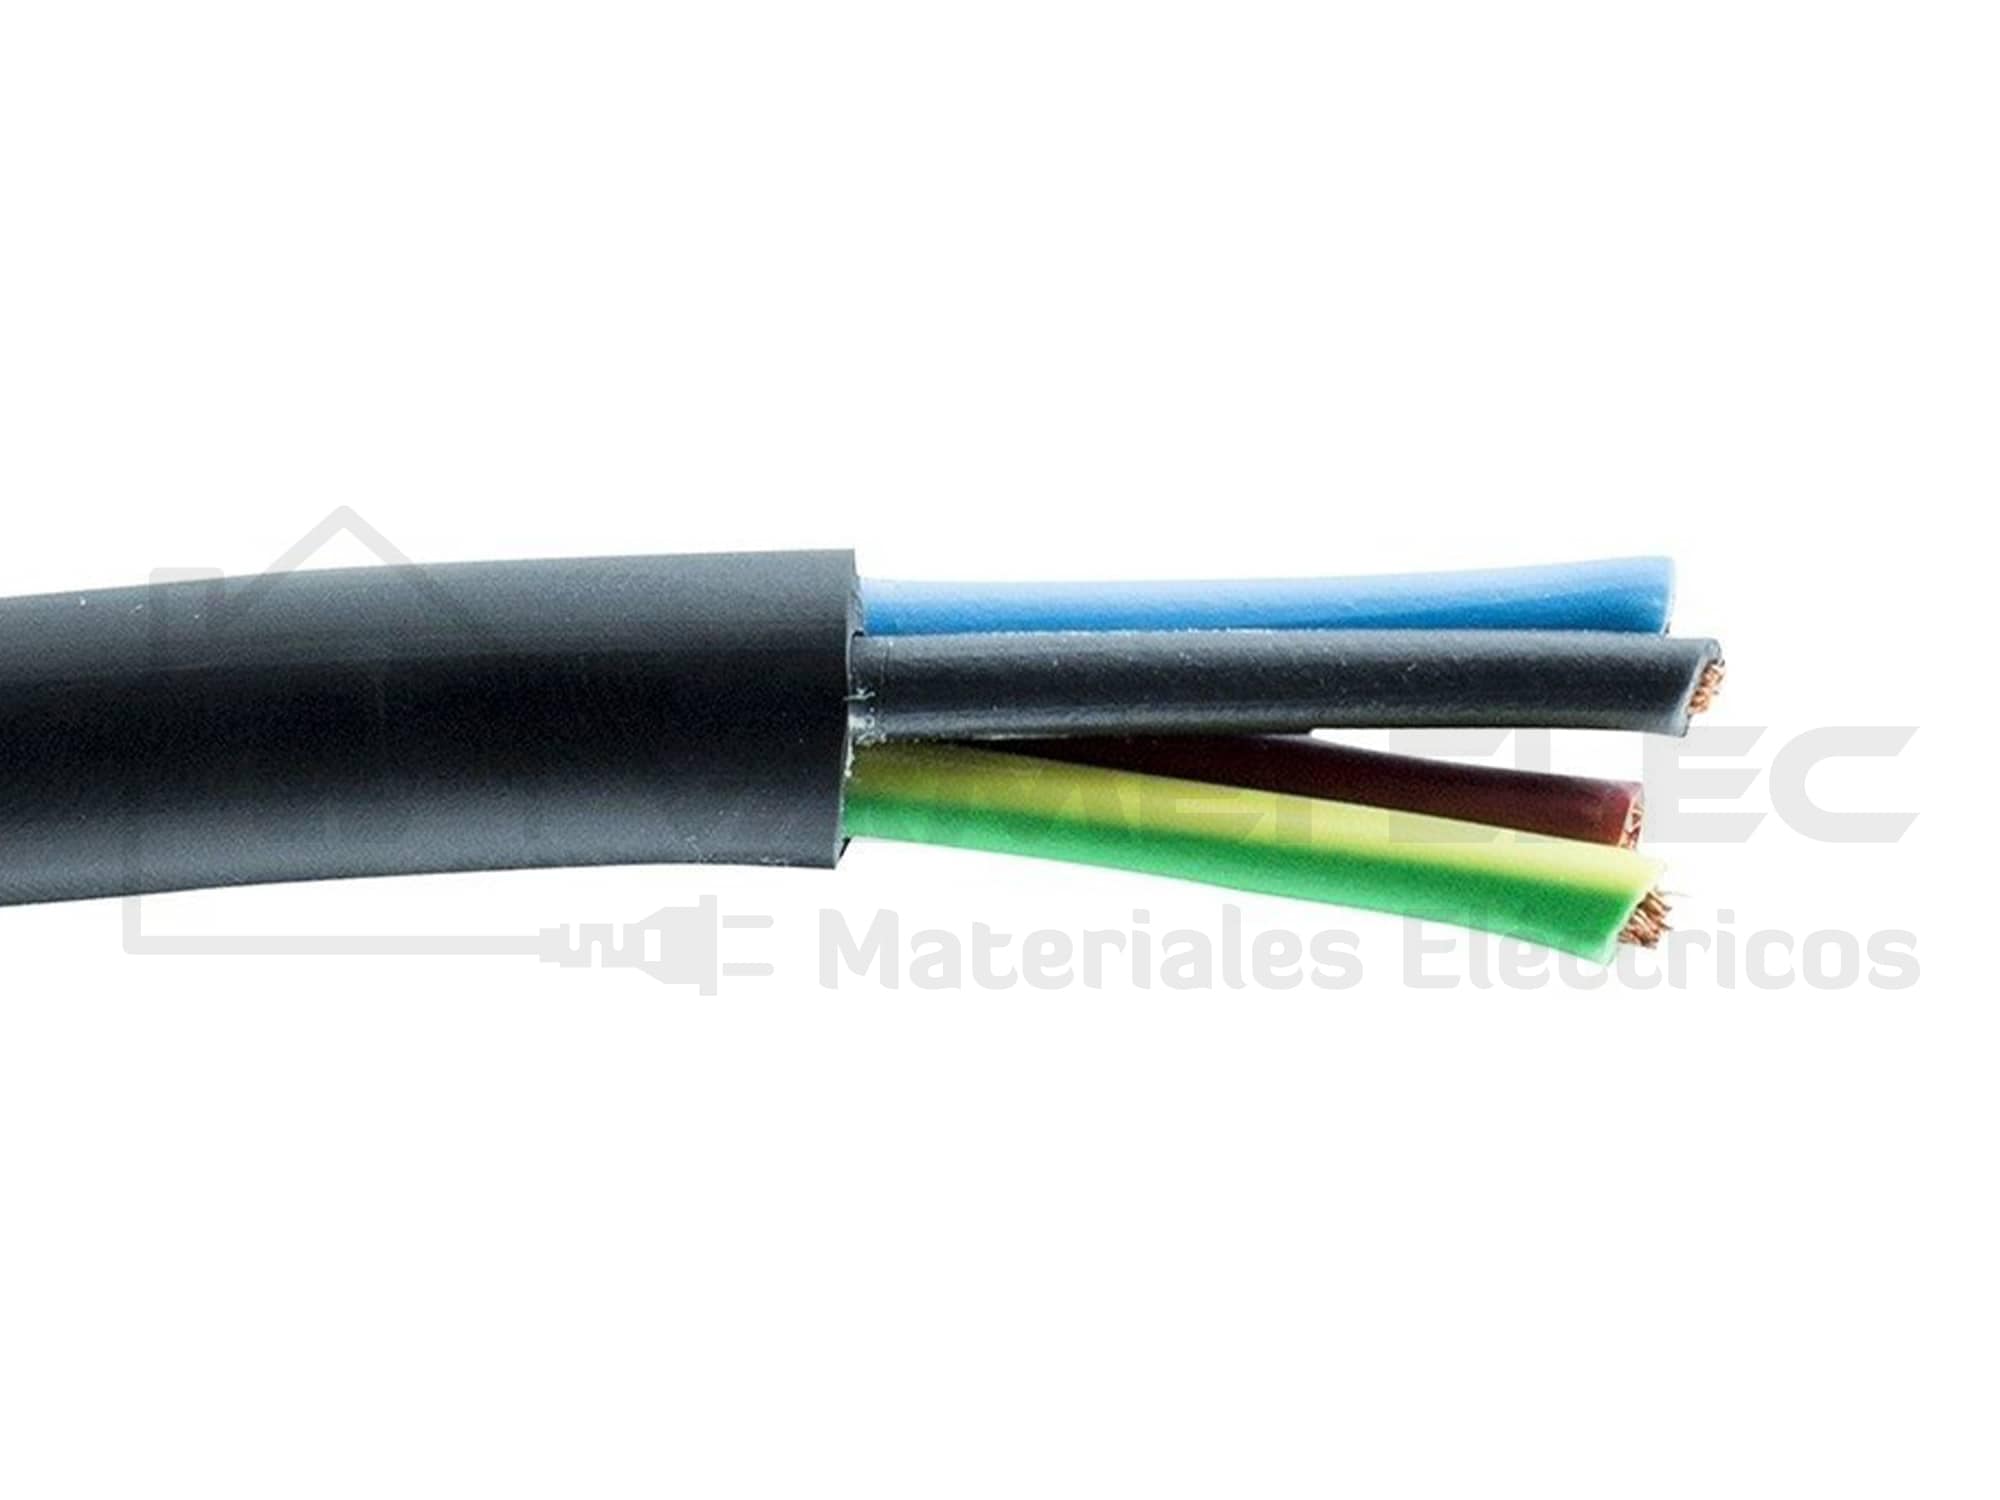 VAMEI Elec - Cables - Envainado redondo negro TPR